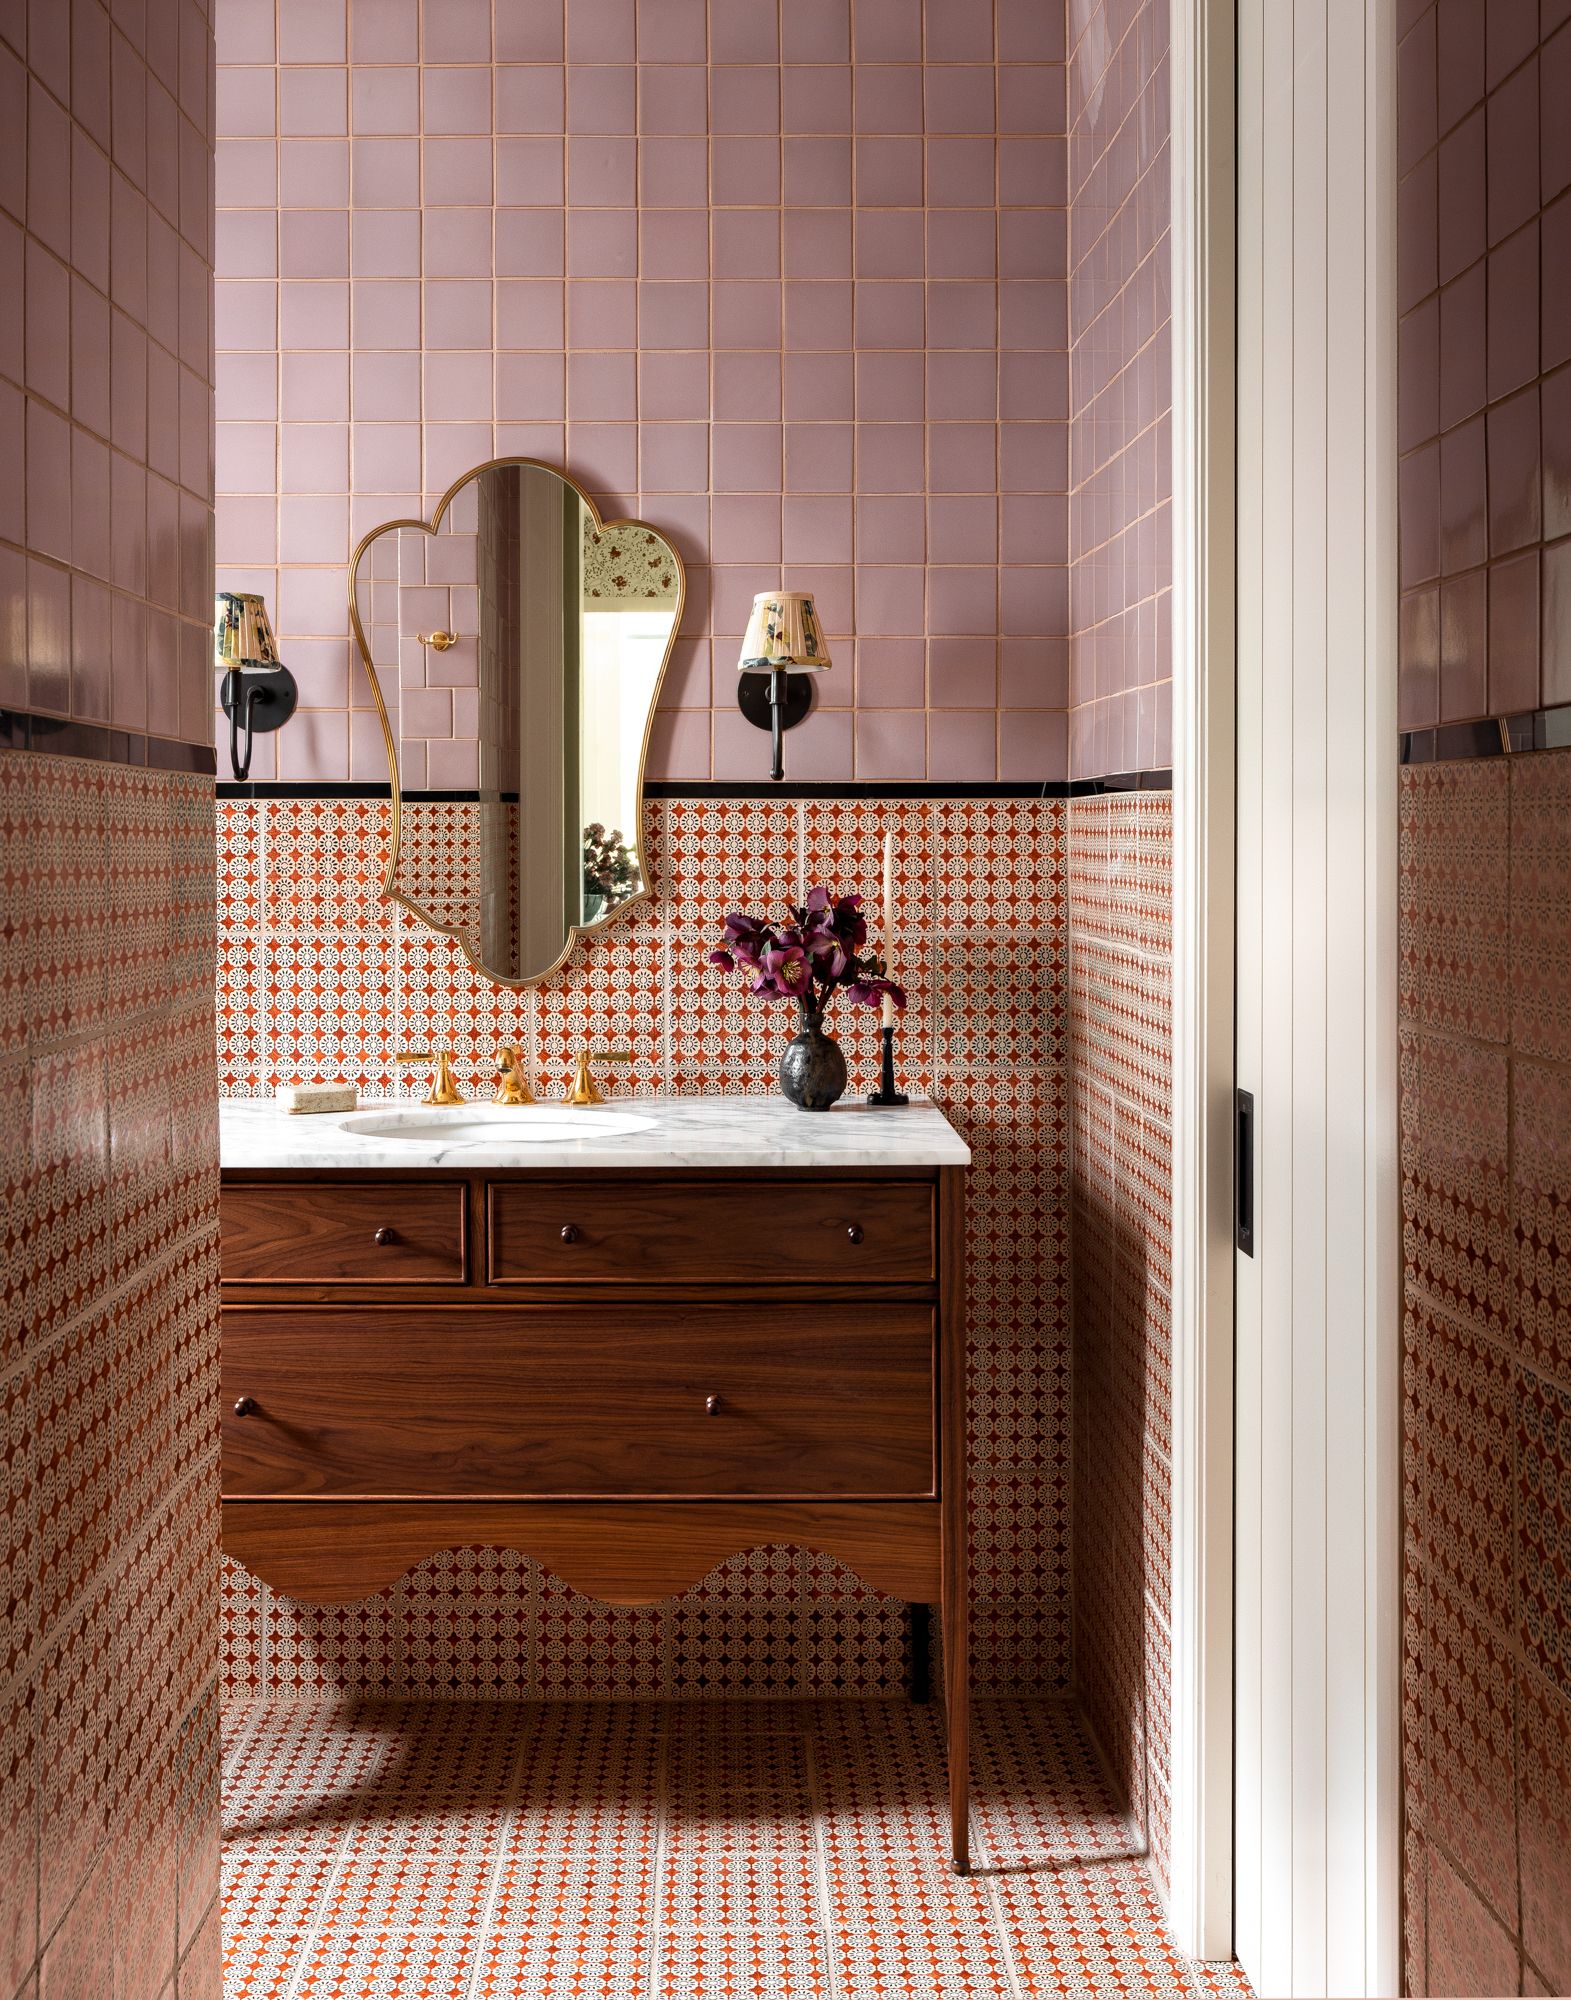 20 Bathroom Floor Ideas We Wish We Saw Sooner